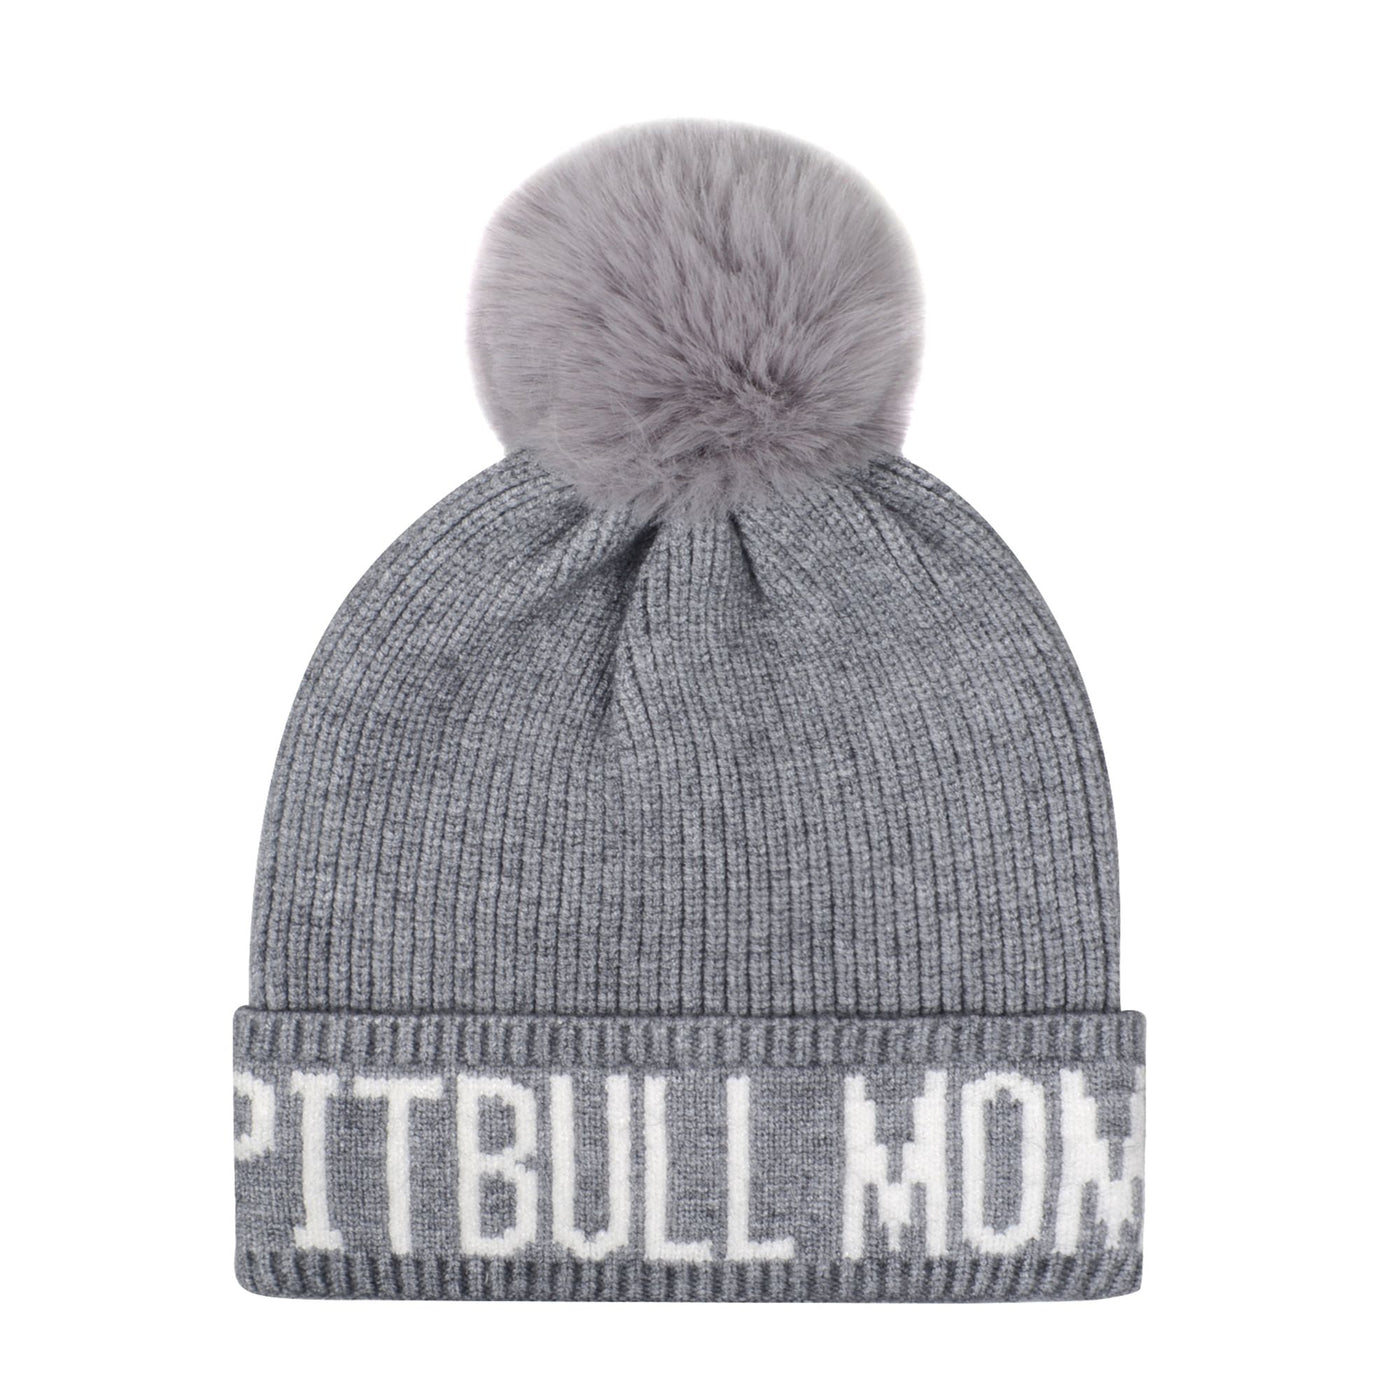 Hatphile Pitbull Mom Knit Hat Beanie